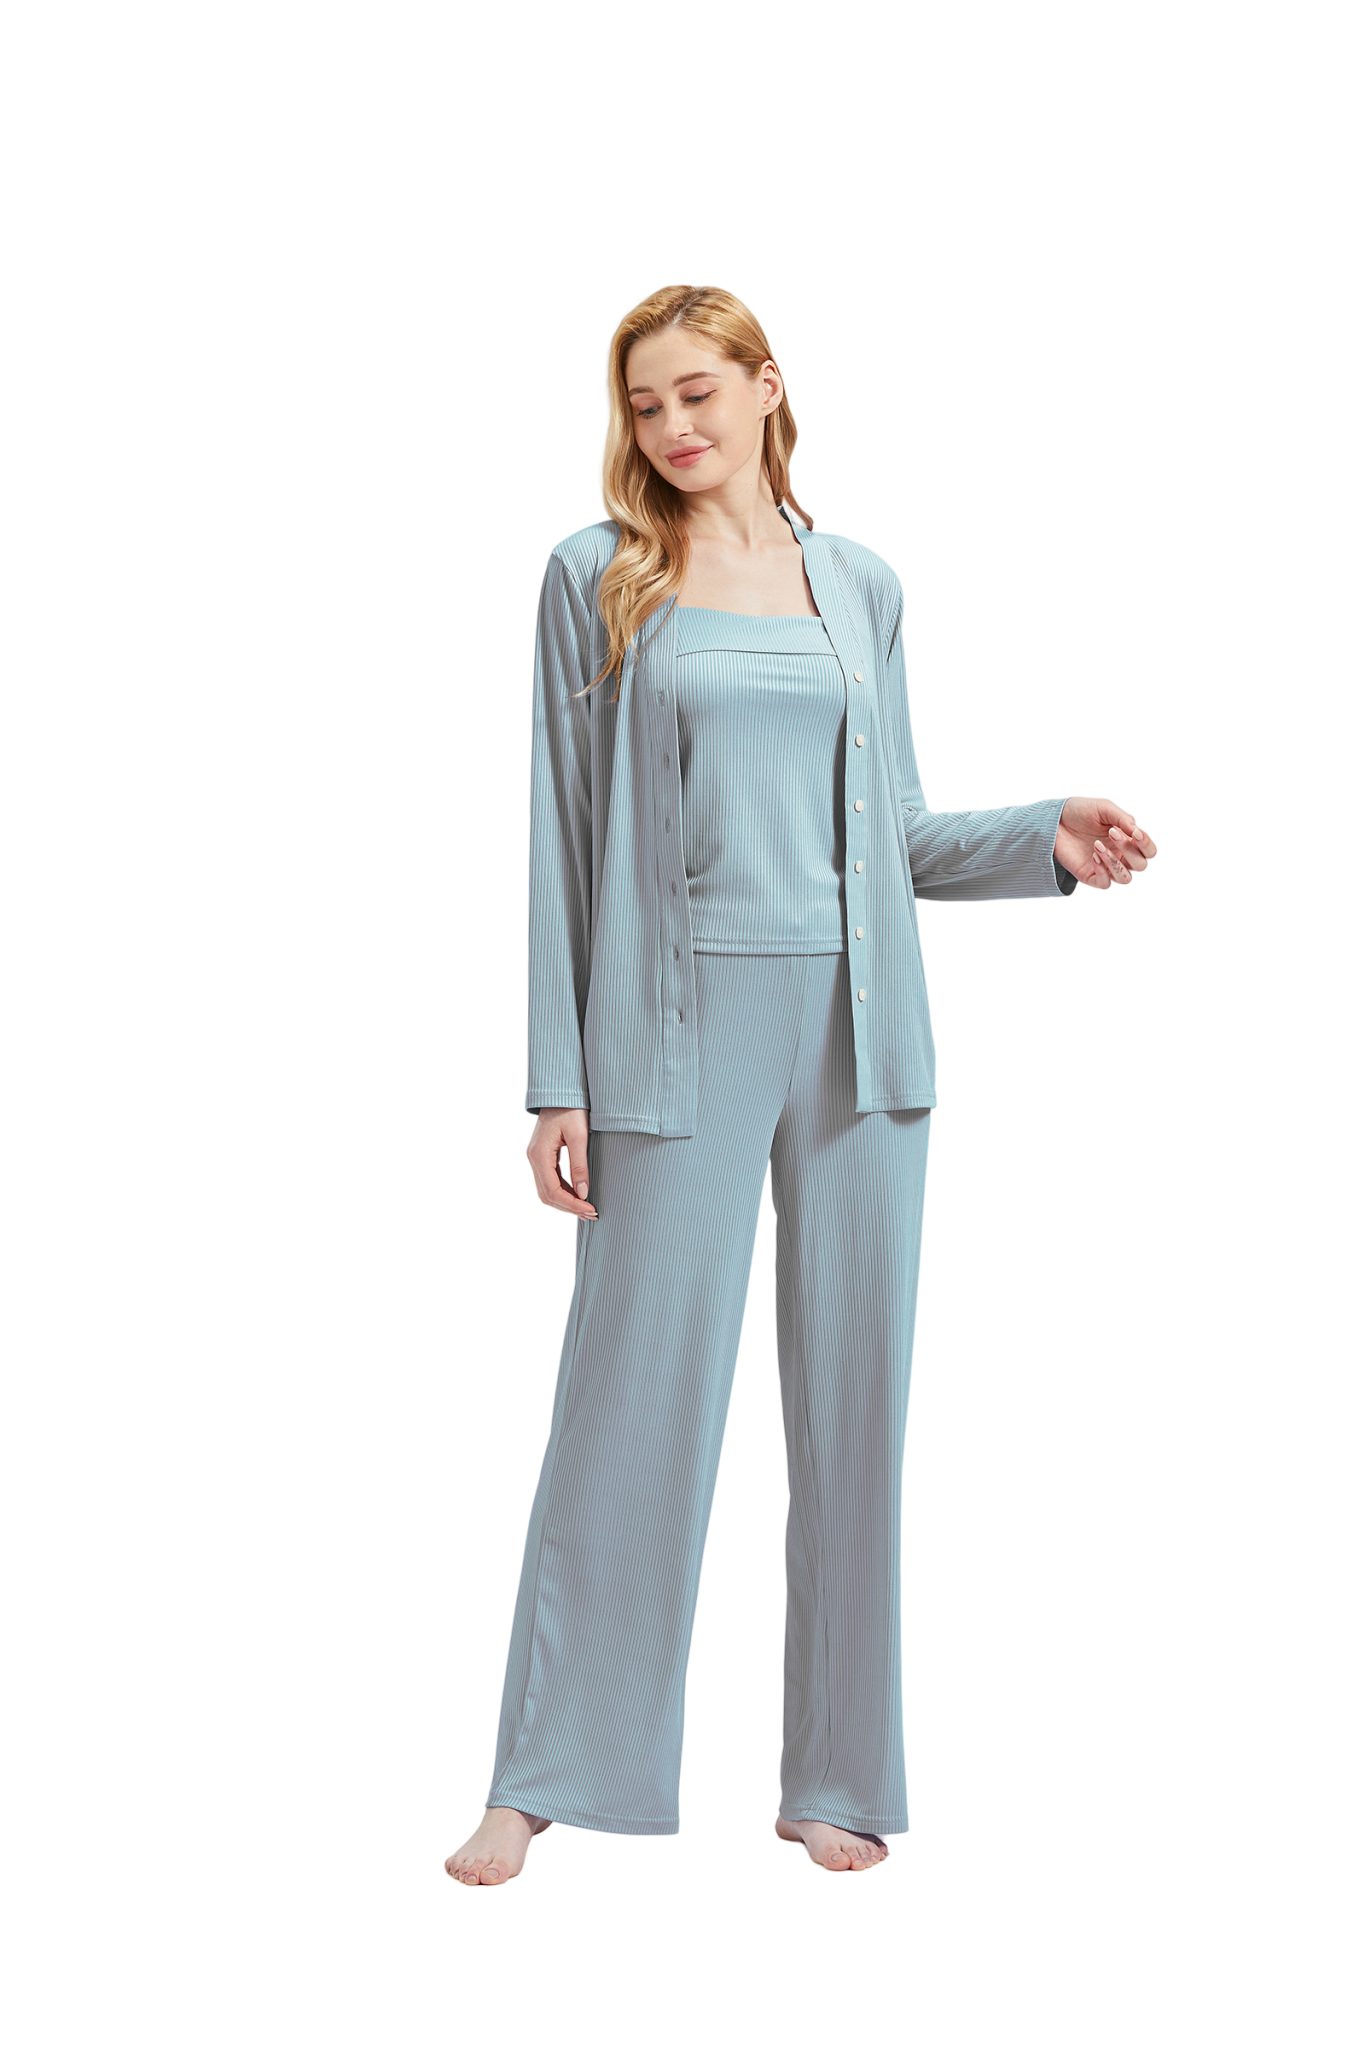 RAIKOU Schlafanzug Damen Pyjama-Set Damenwäsche V-Ausschnitt (Set, 3 tlg) incl.Jacket Top Hose Blaugrau